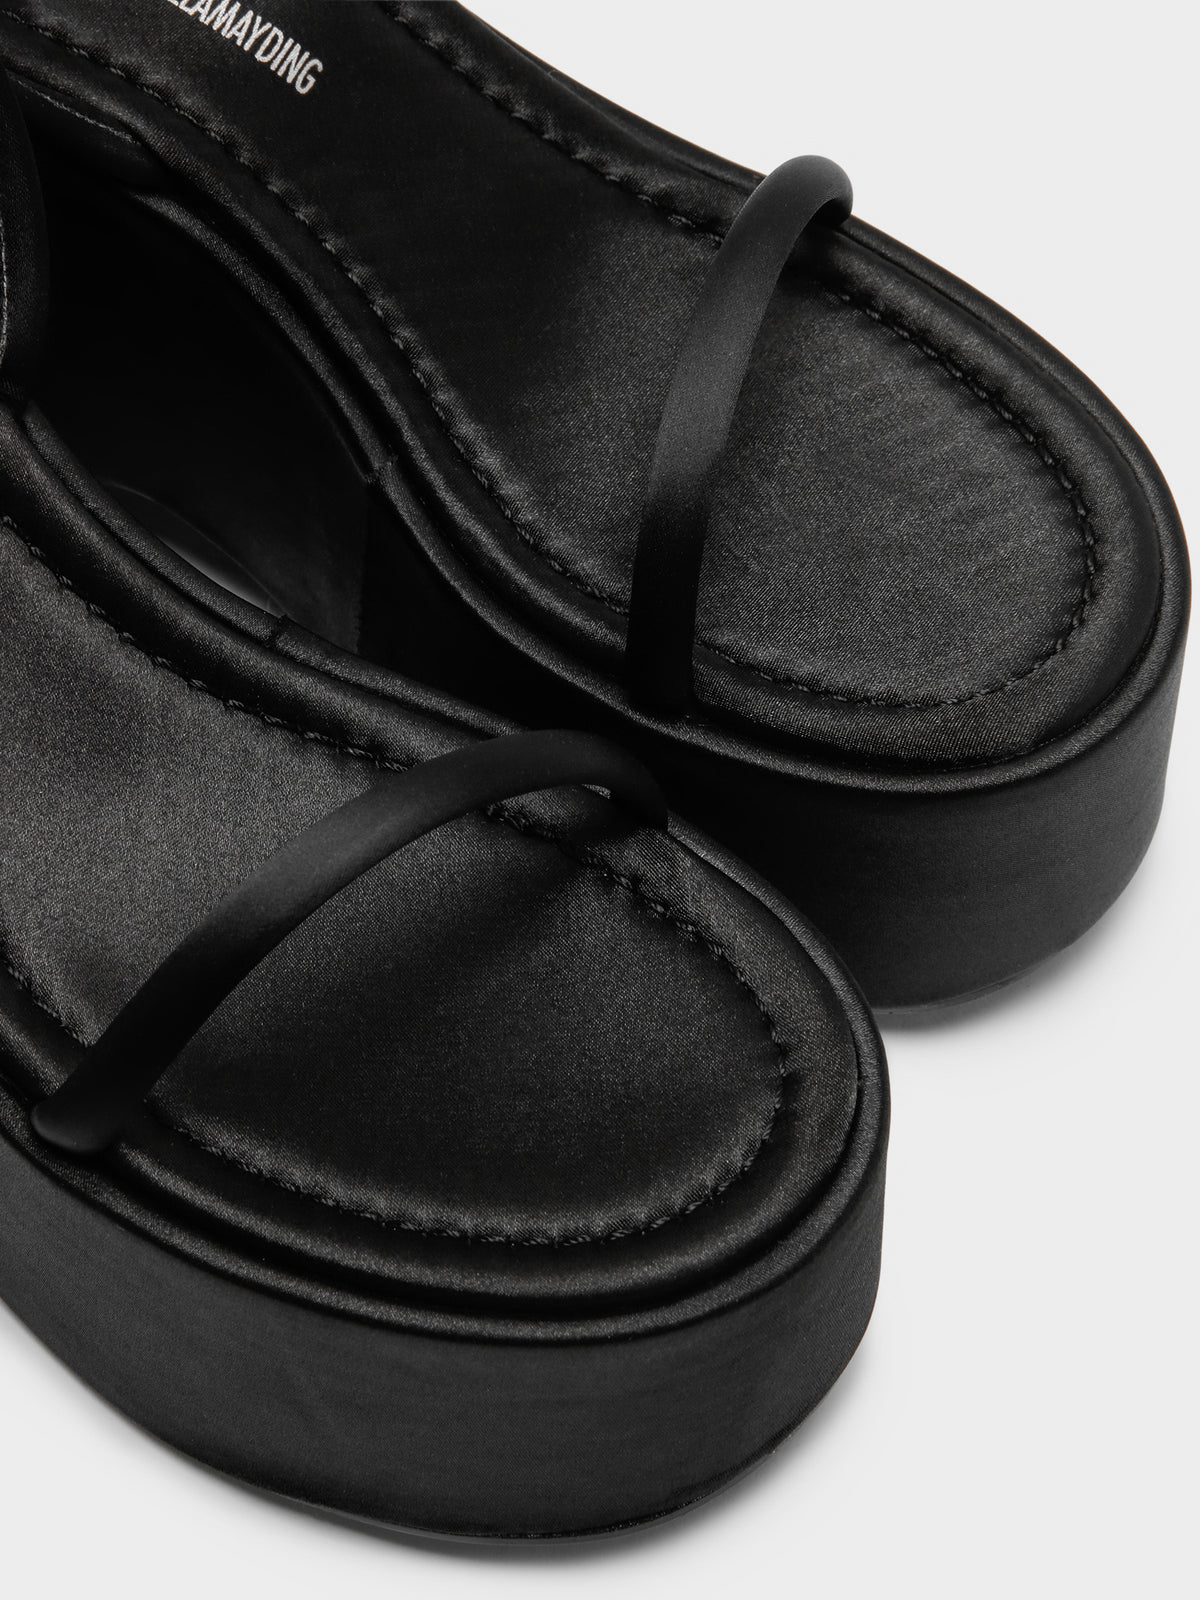 Womens Ella May Ding Elevate Platform Sandals in Black